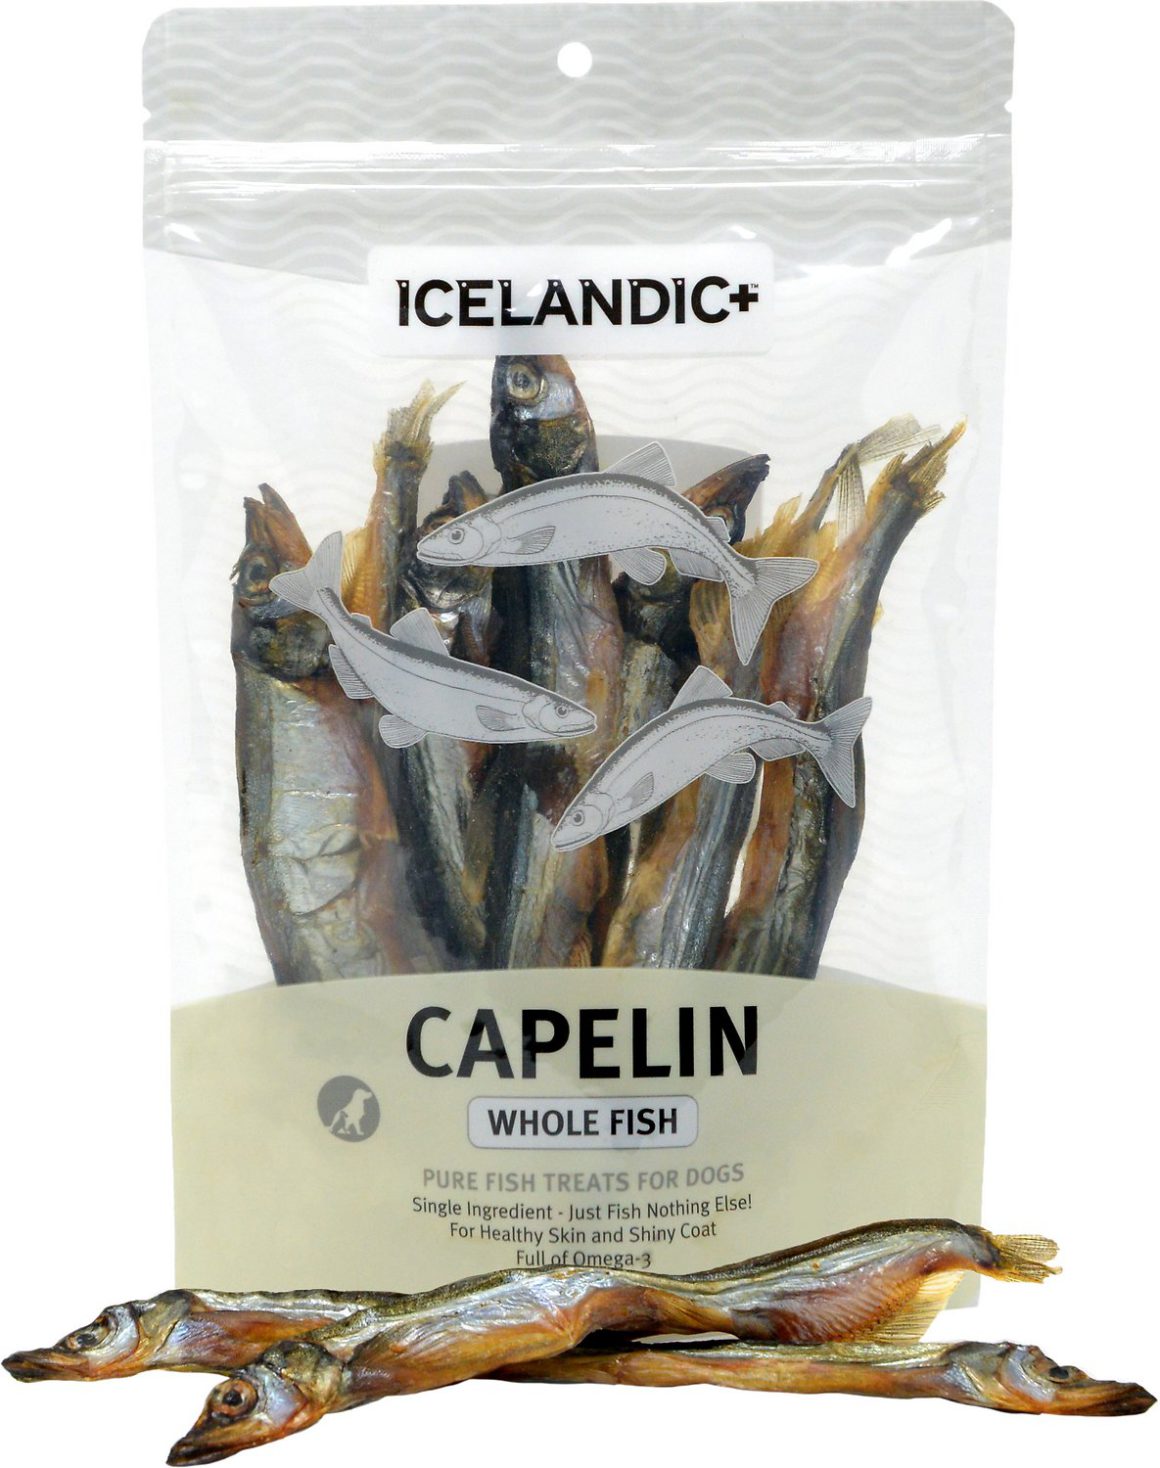 Icelandic+ Capelin Whole Fish & Pieces